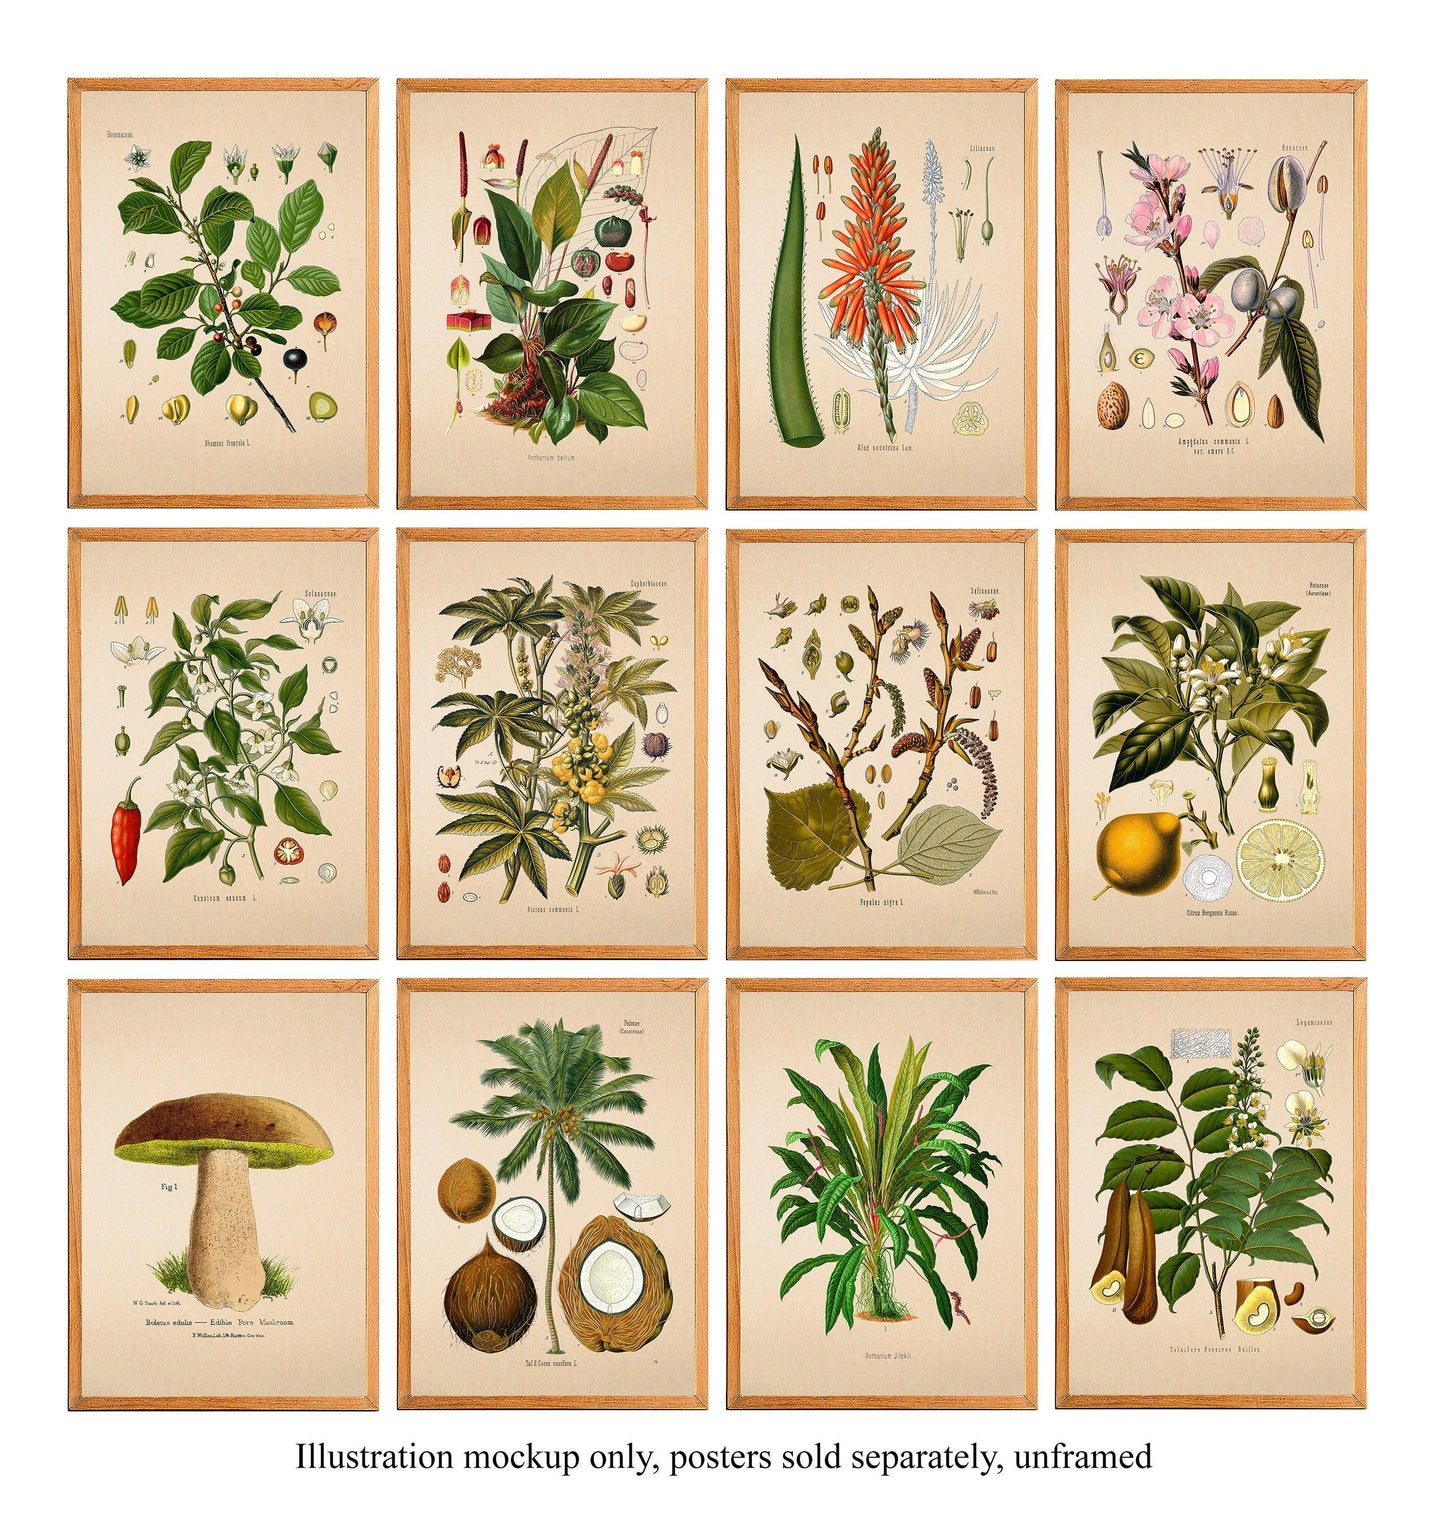 Anthurium Crombezianum - Vintage Flower Print - Classic Posters